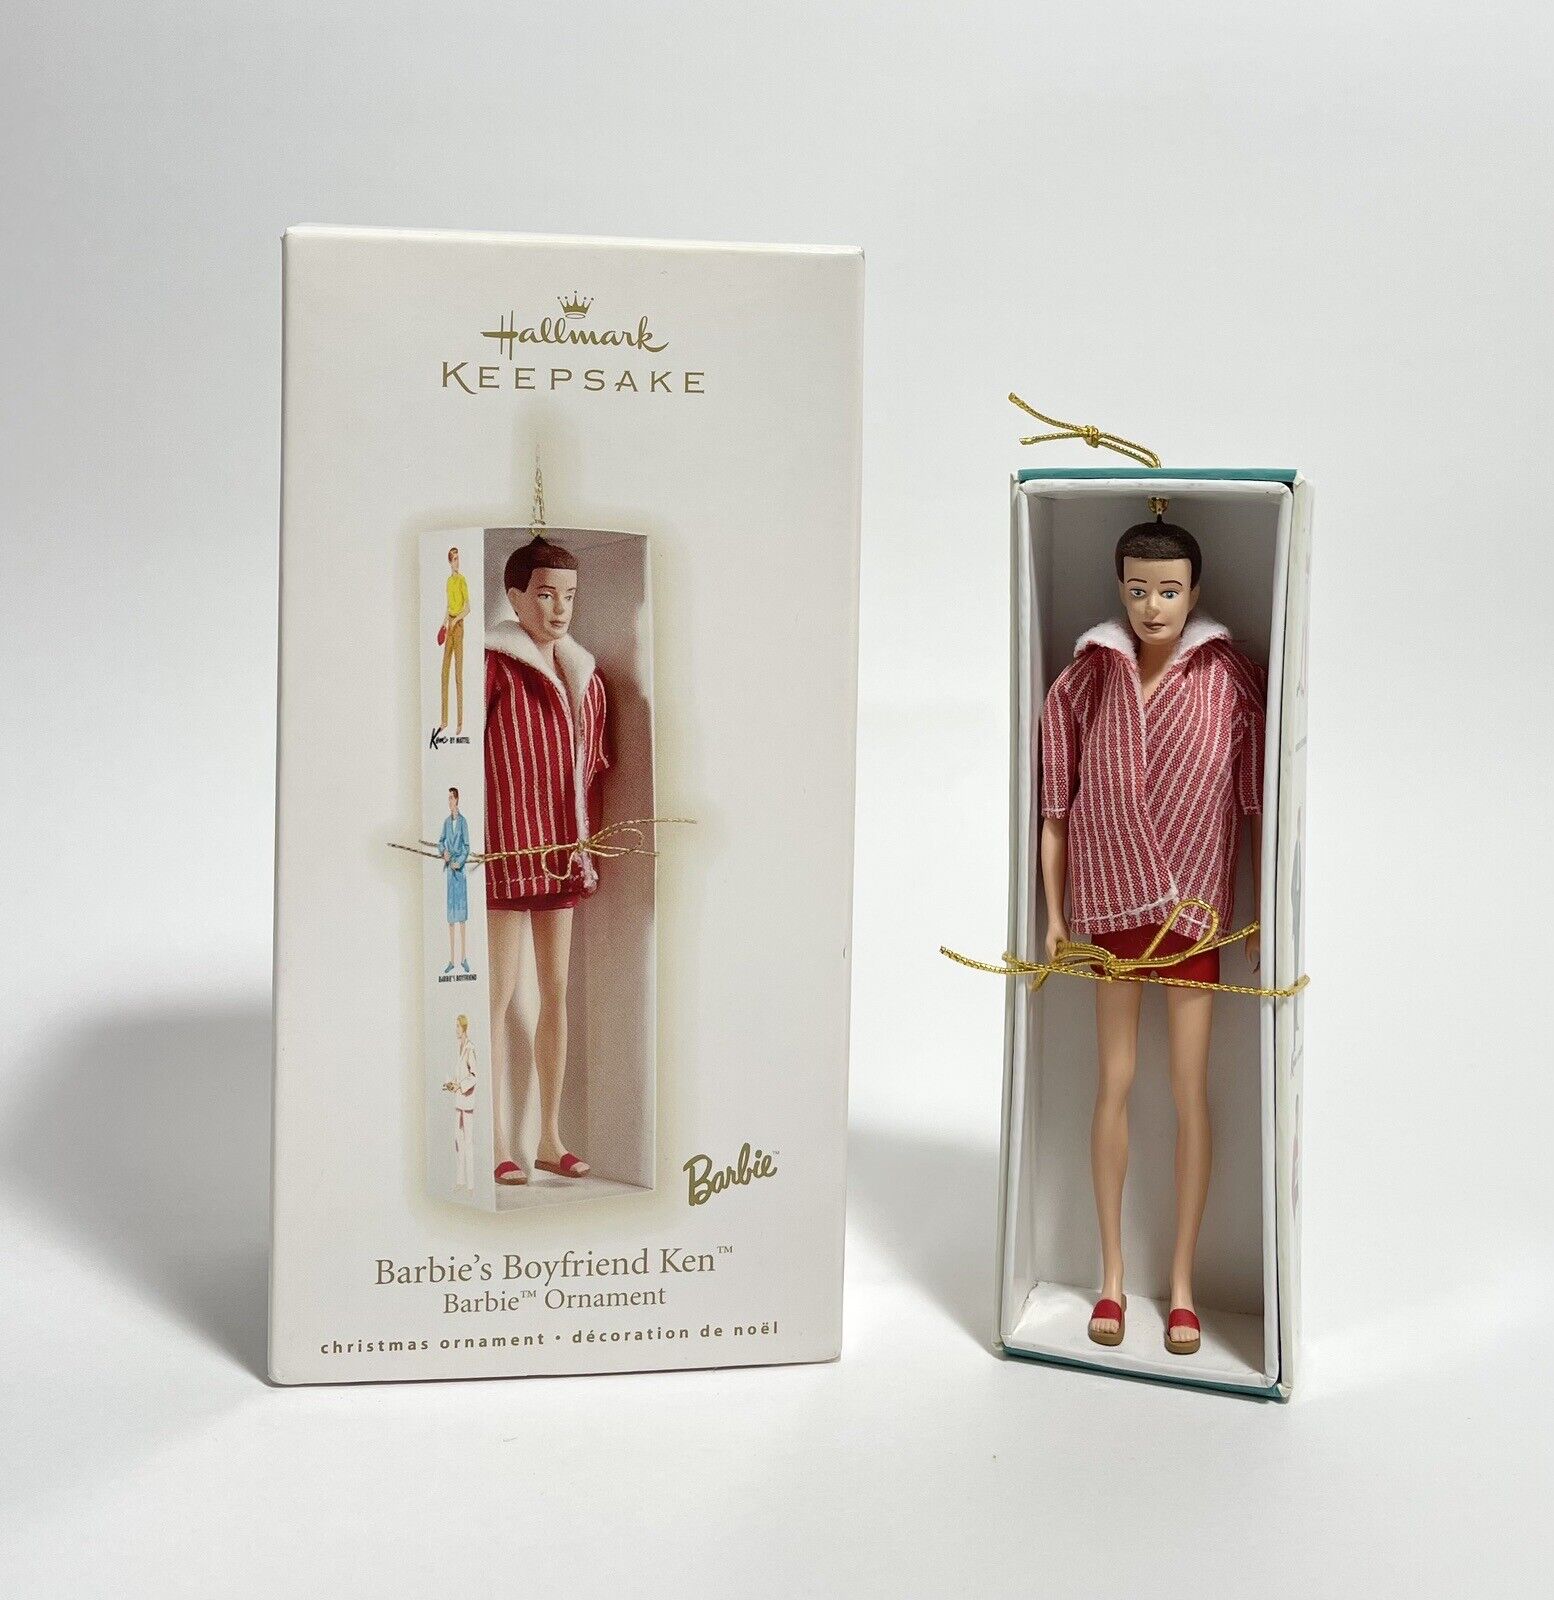 2009 Hallmark Keepsake Barbie's Boyfriend Ken Christmas Ornament